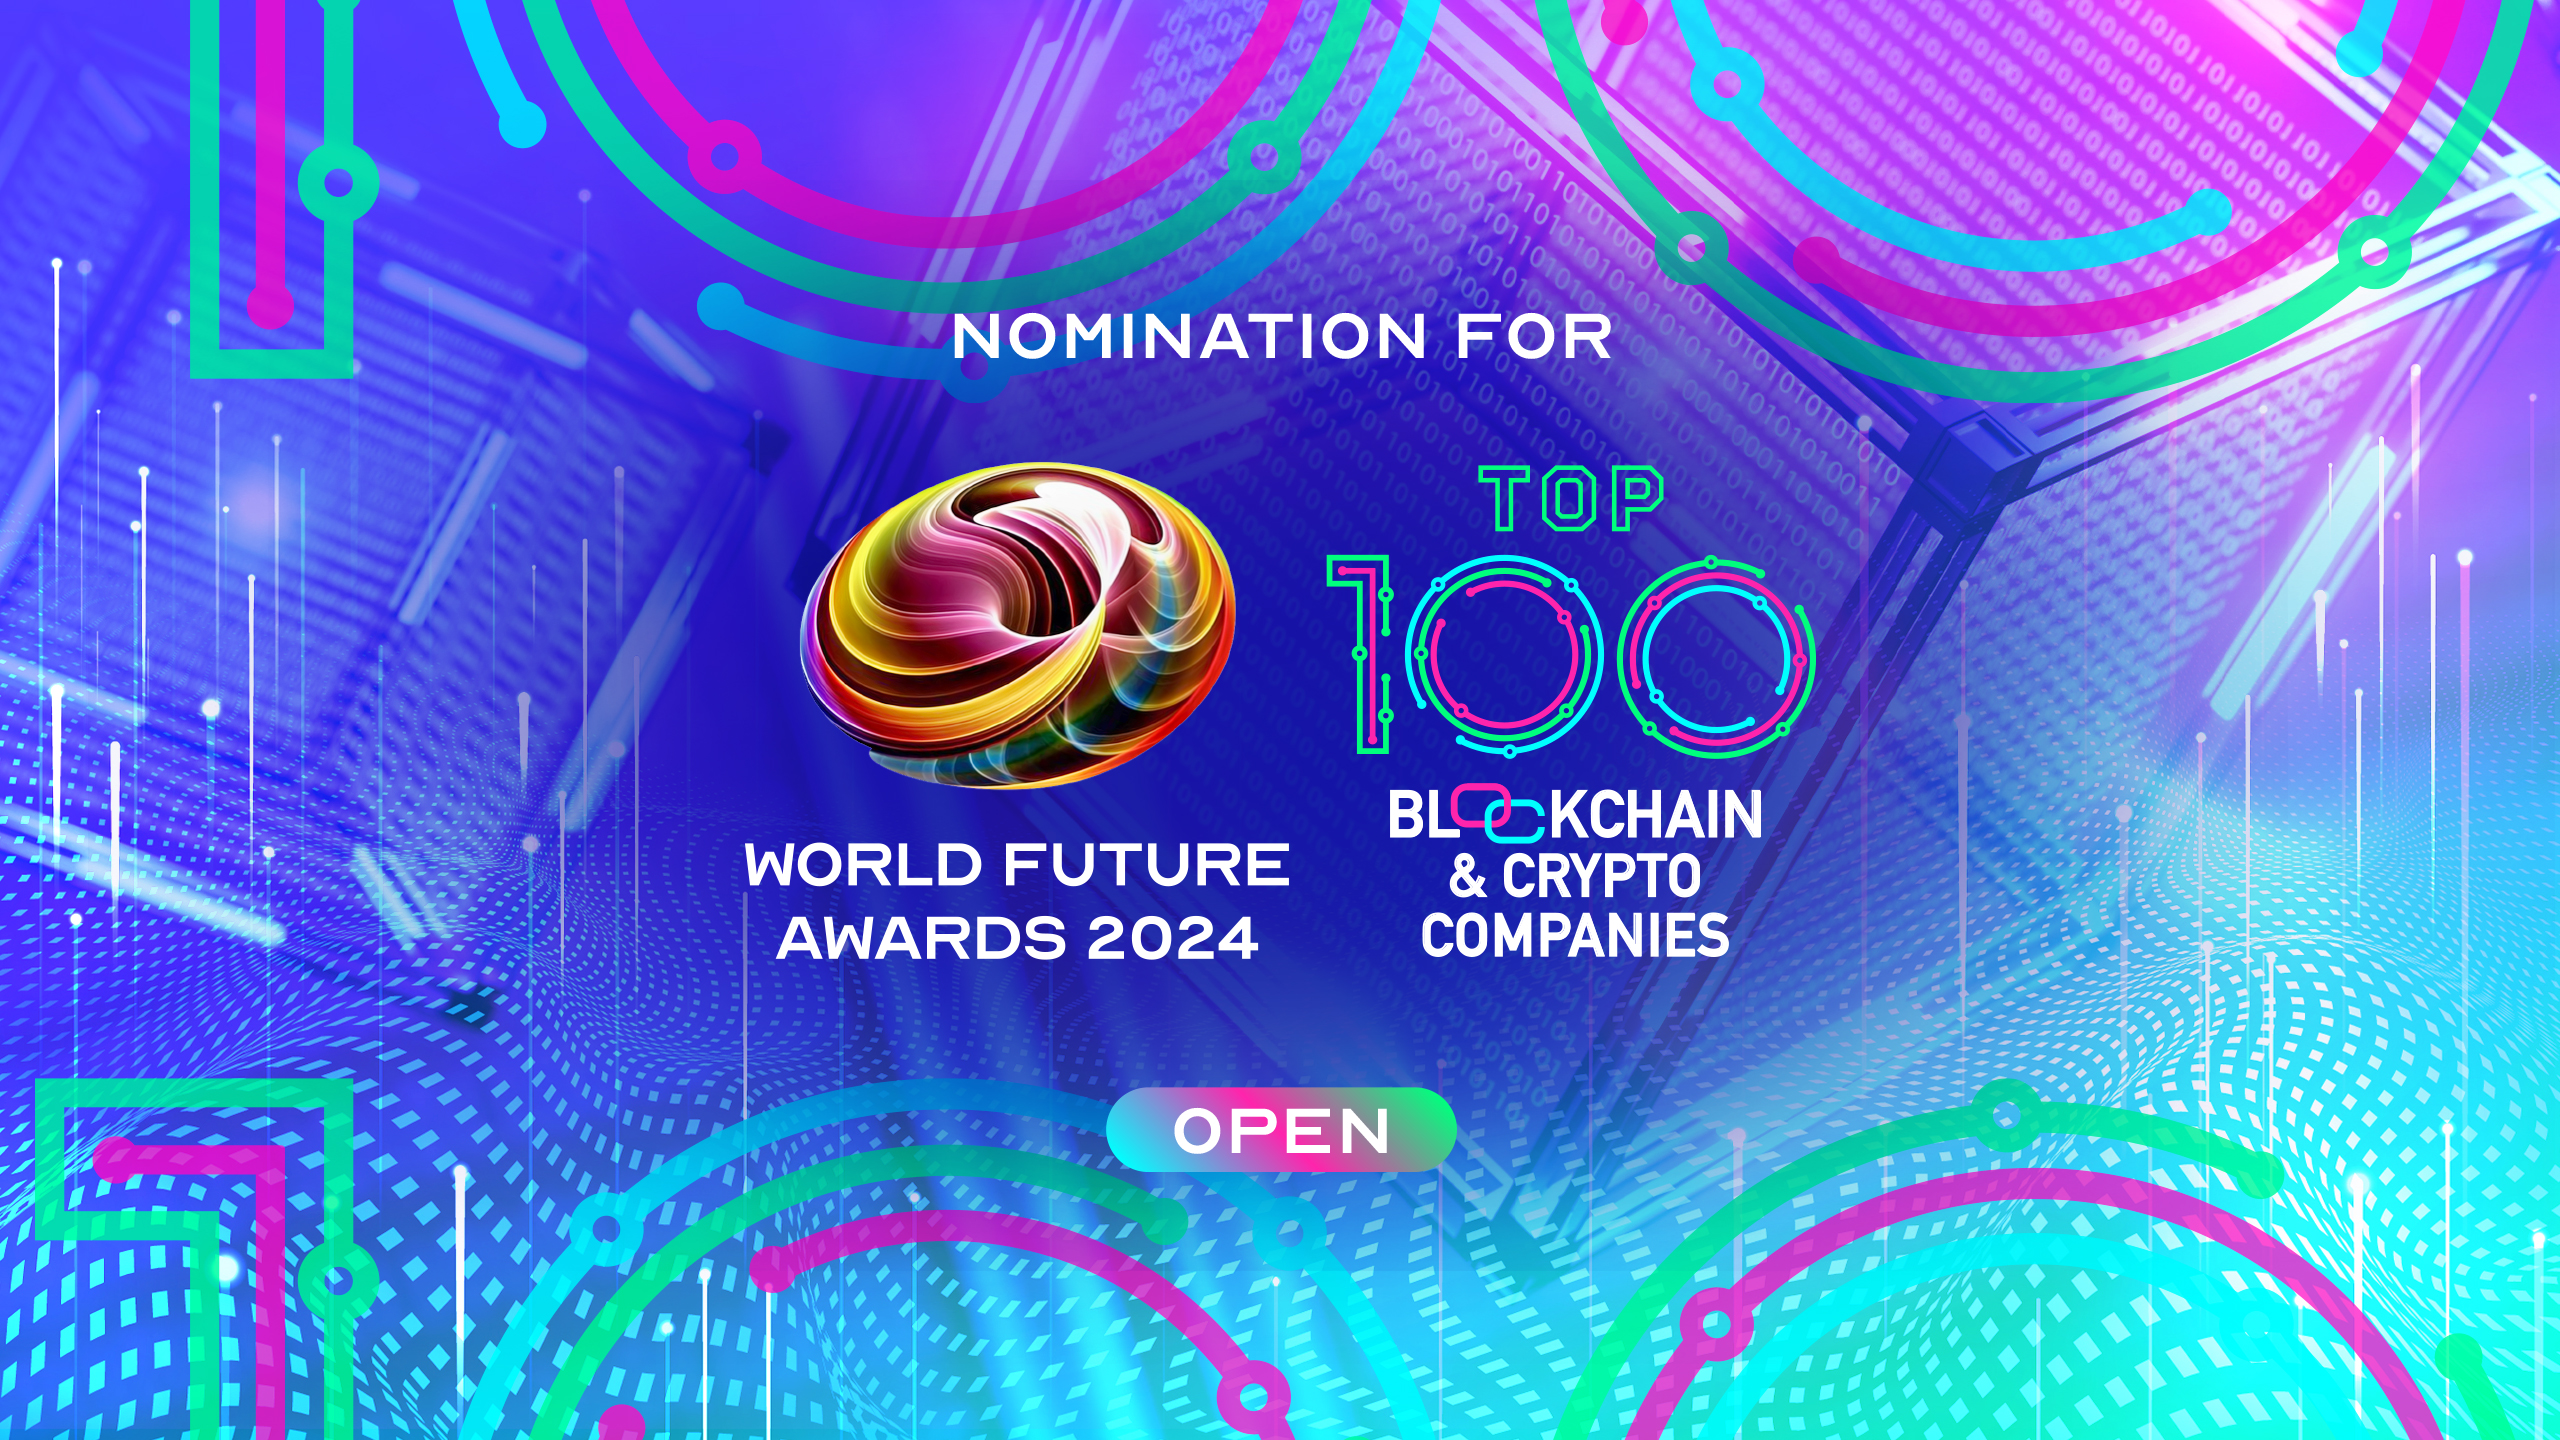 World Future Award Team Opens Nominations for Top 100 Blockchain & Crypto Companies 2024